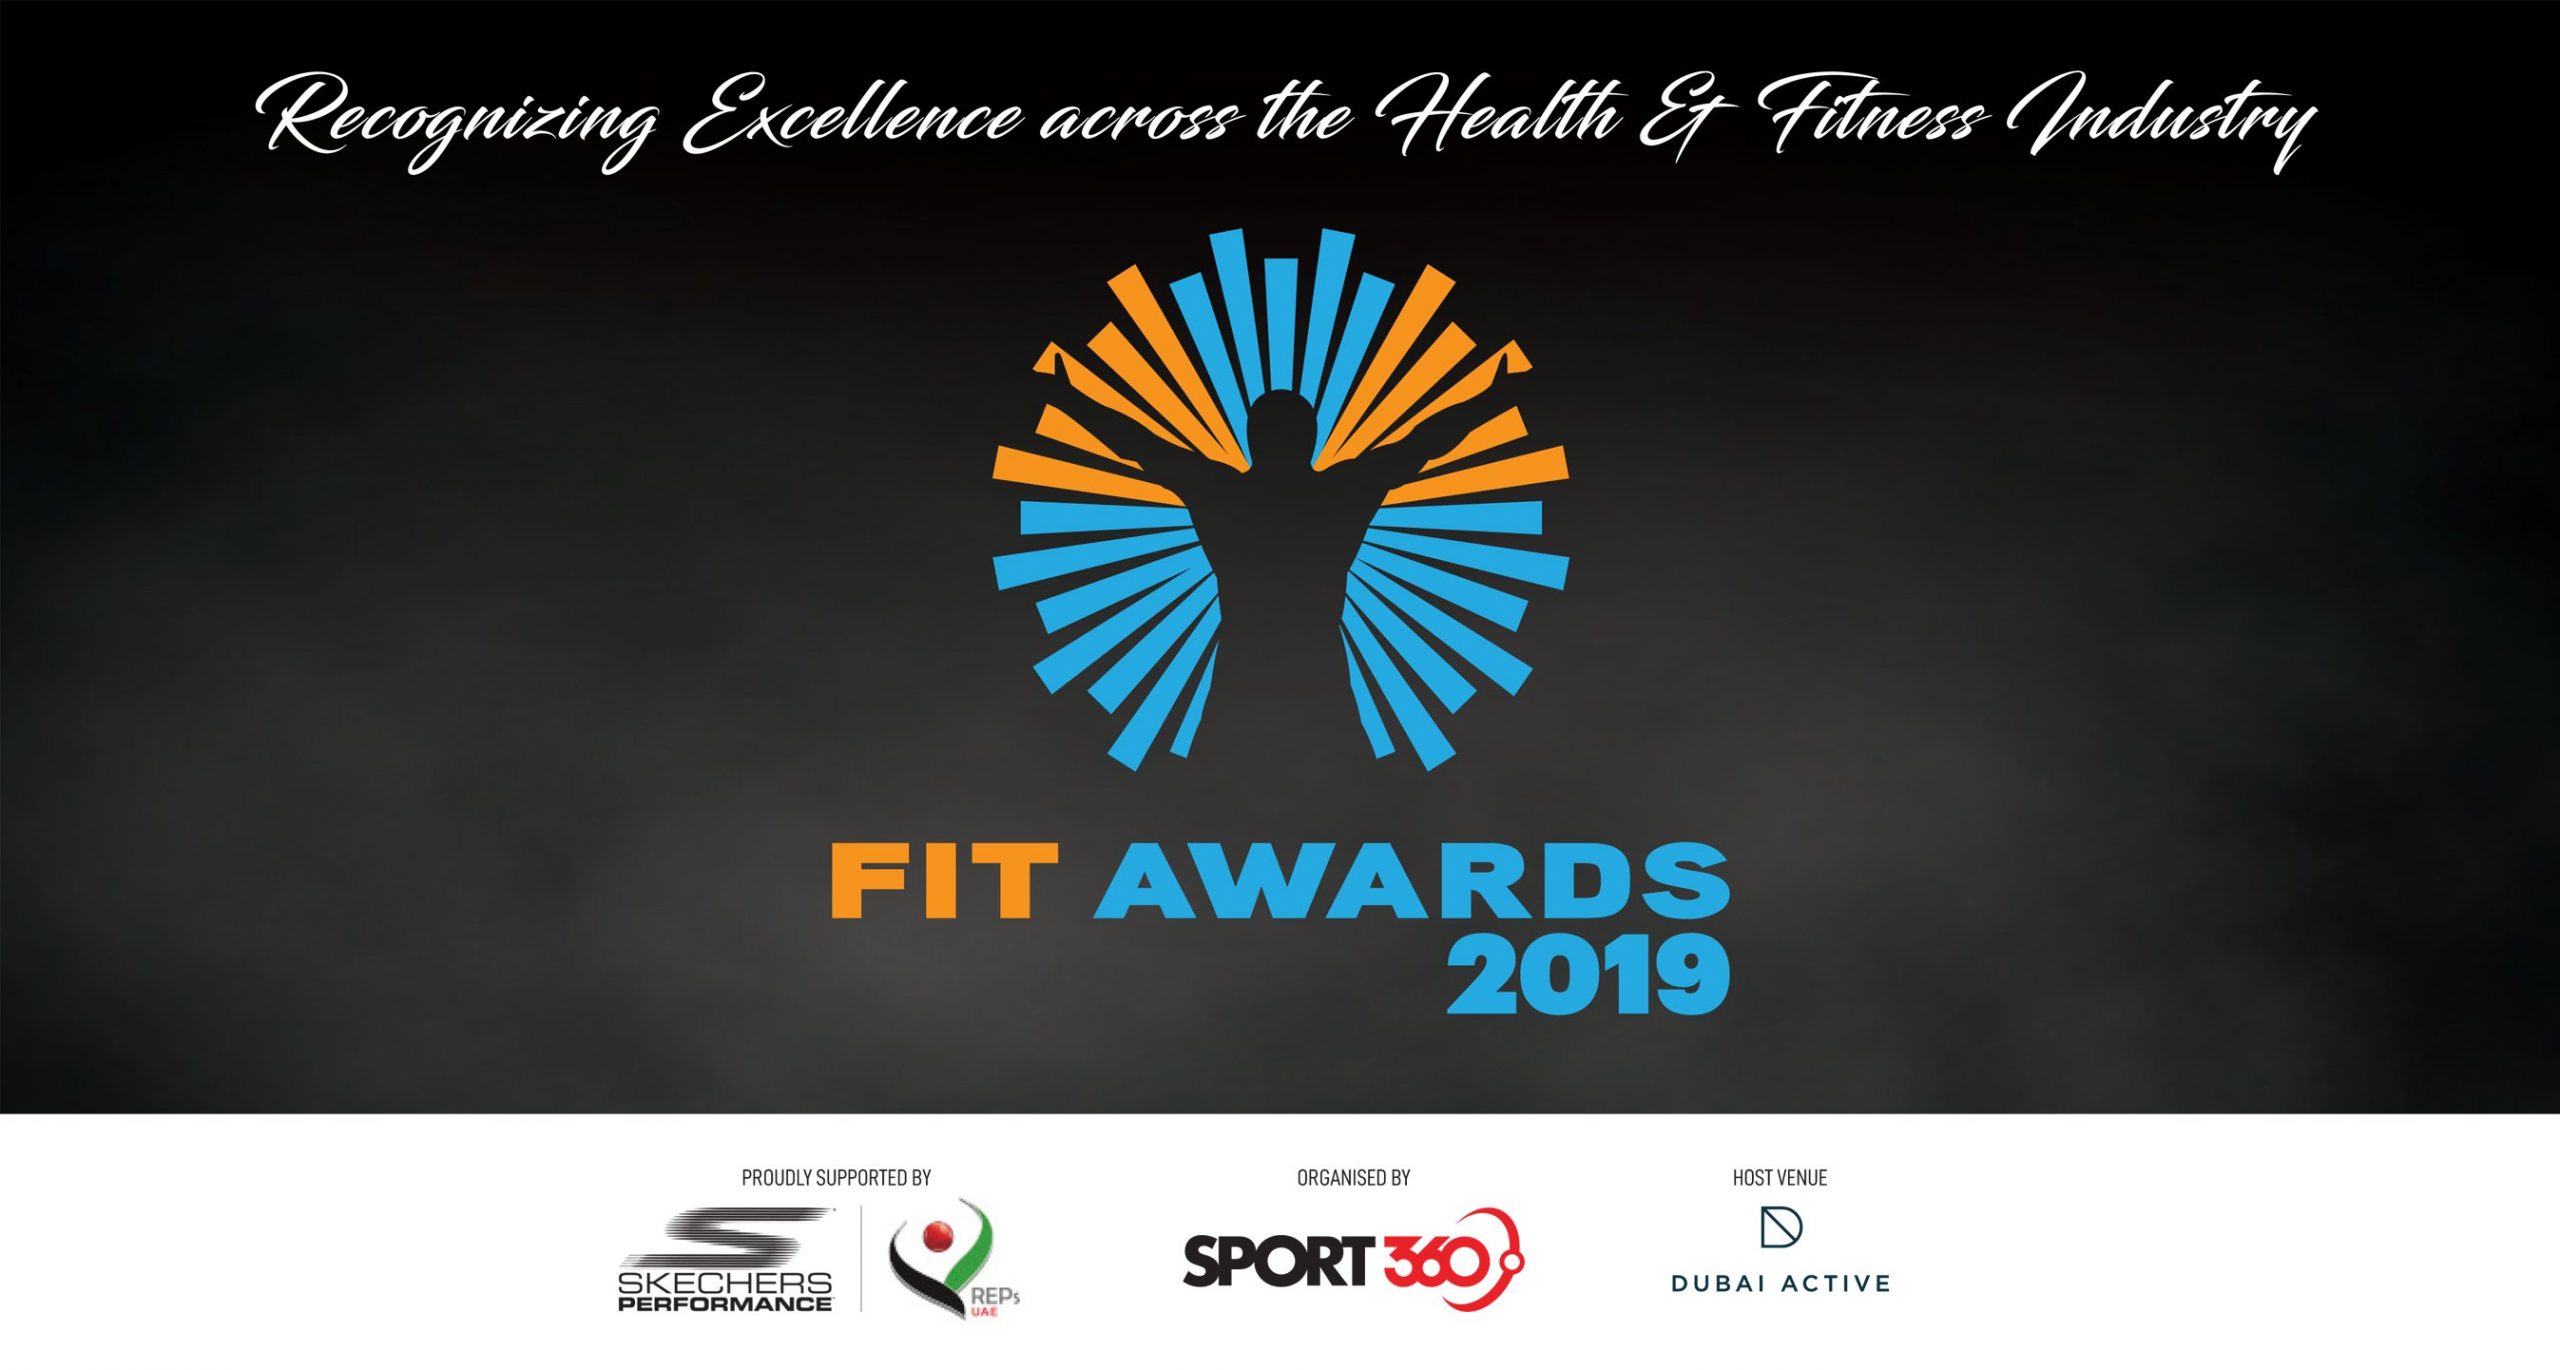 FIT Awards 2019 - Coming Soon in UAE